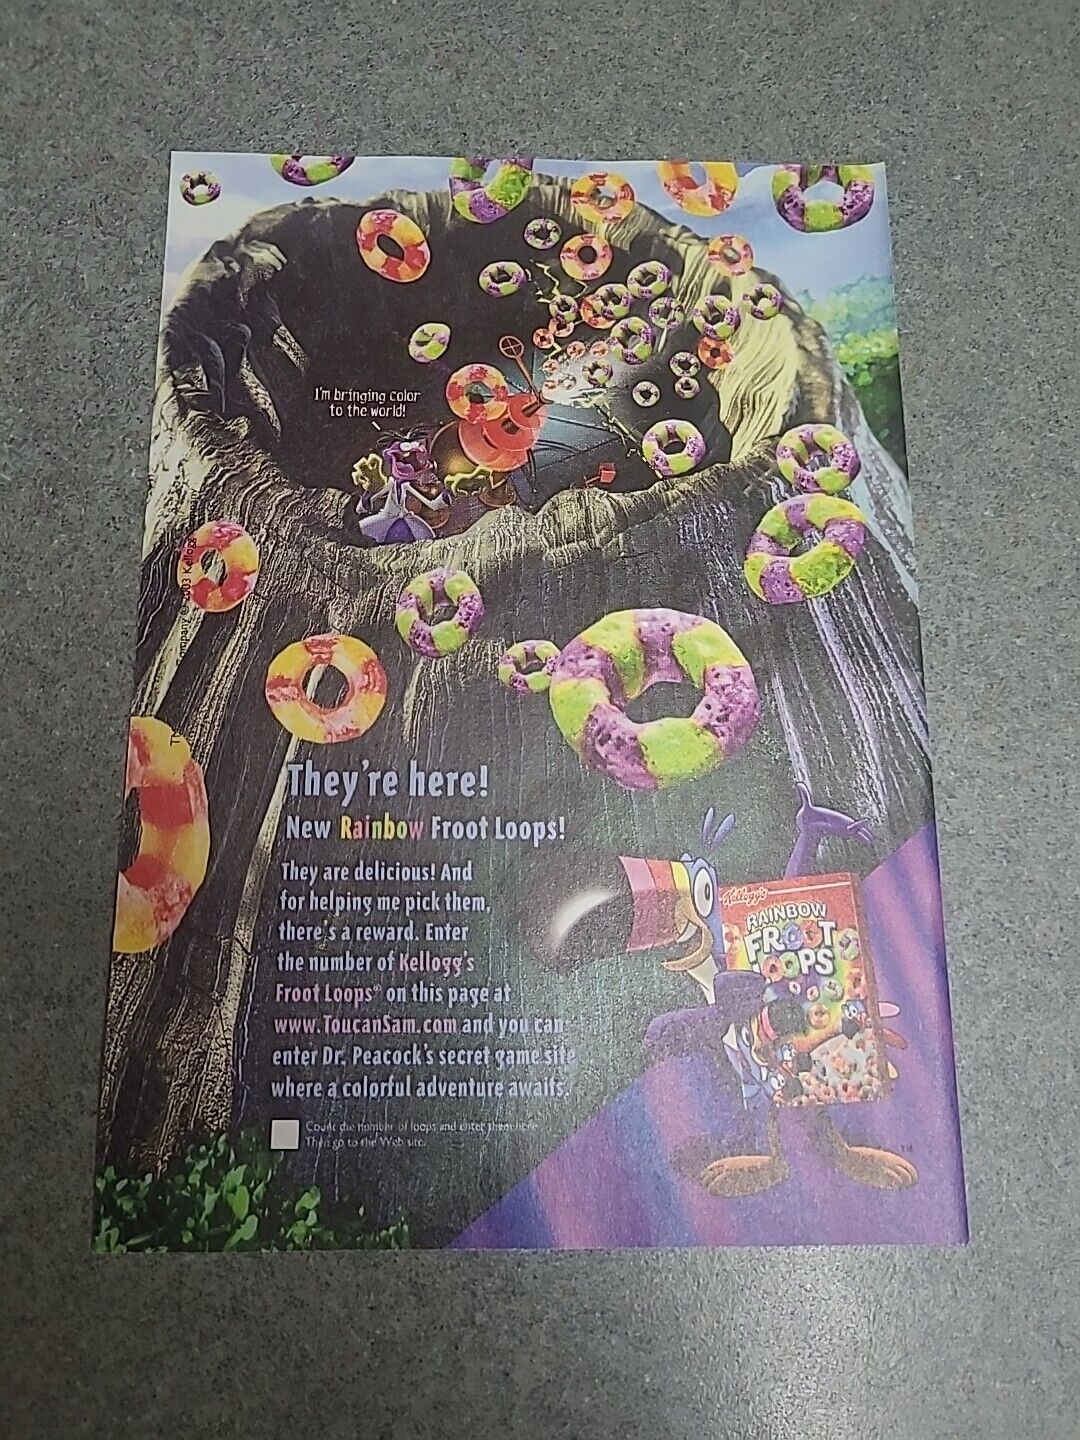 Rainbow Froot Loops Cereal Original Print Ad 2003 5x7